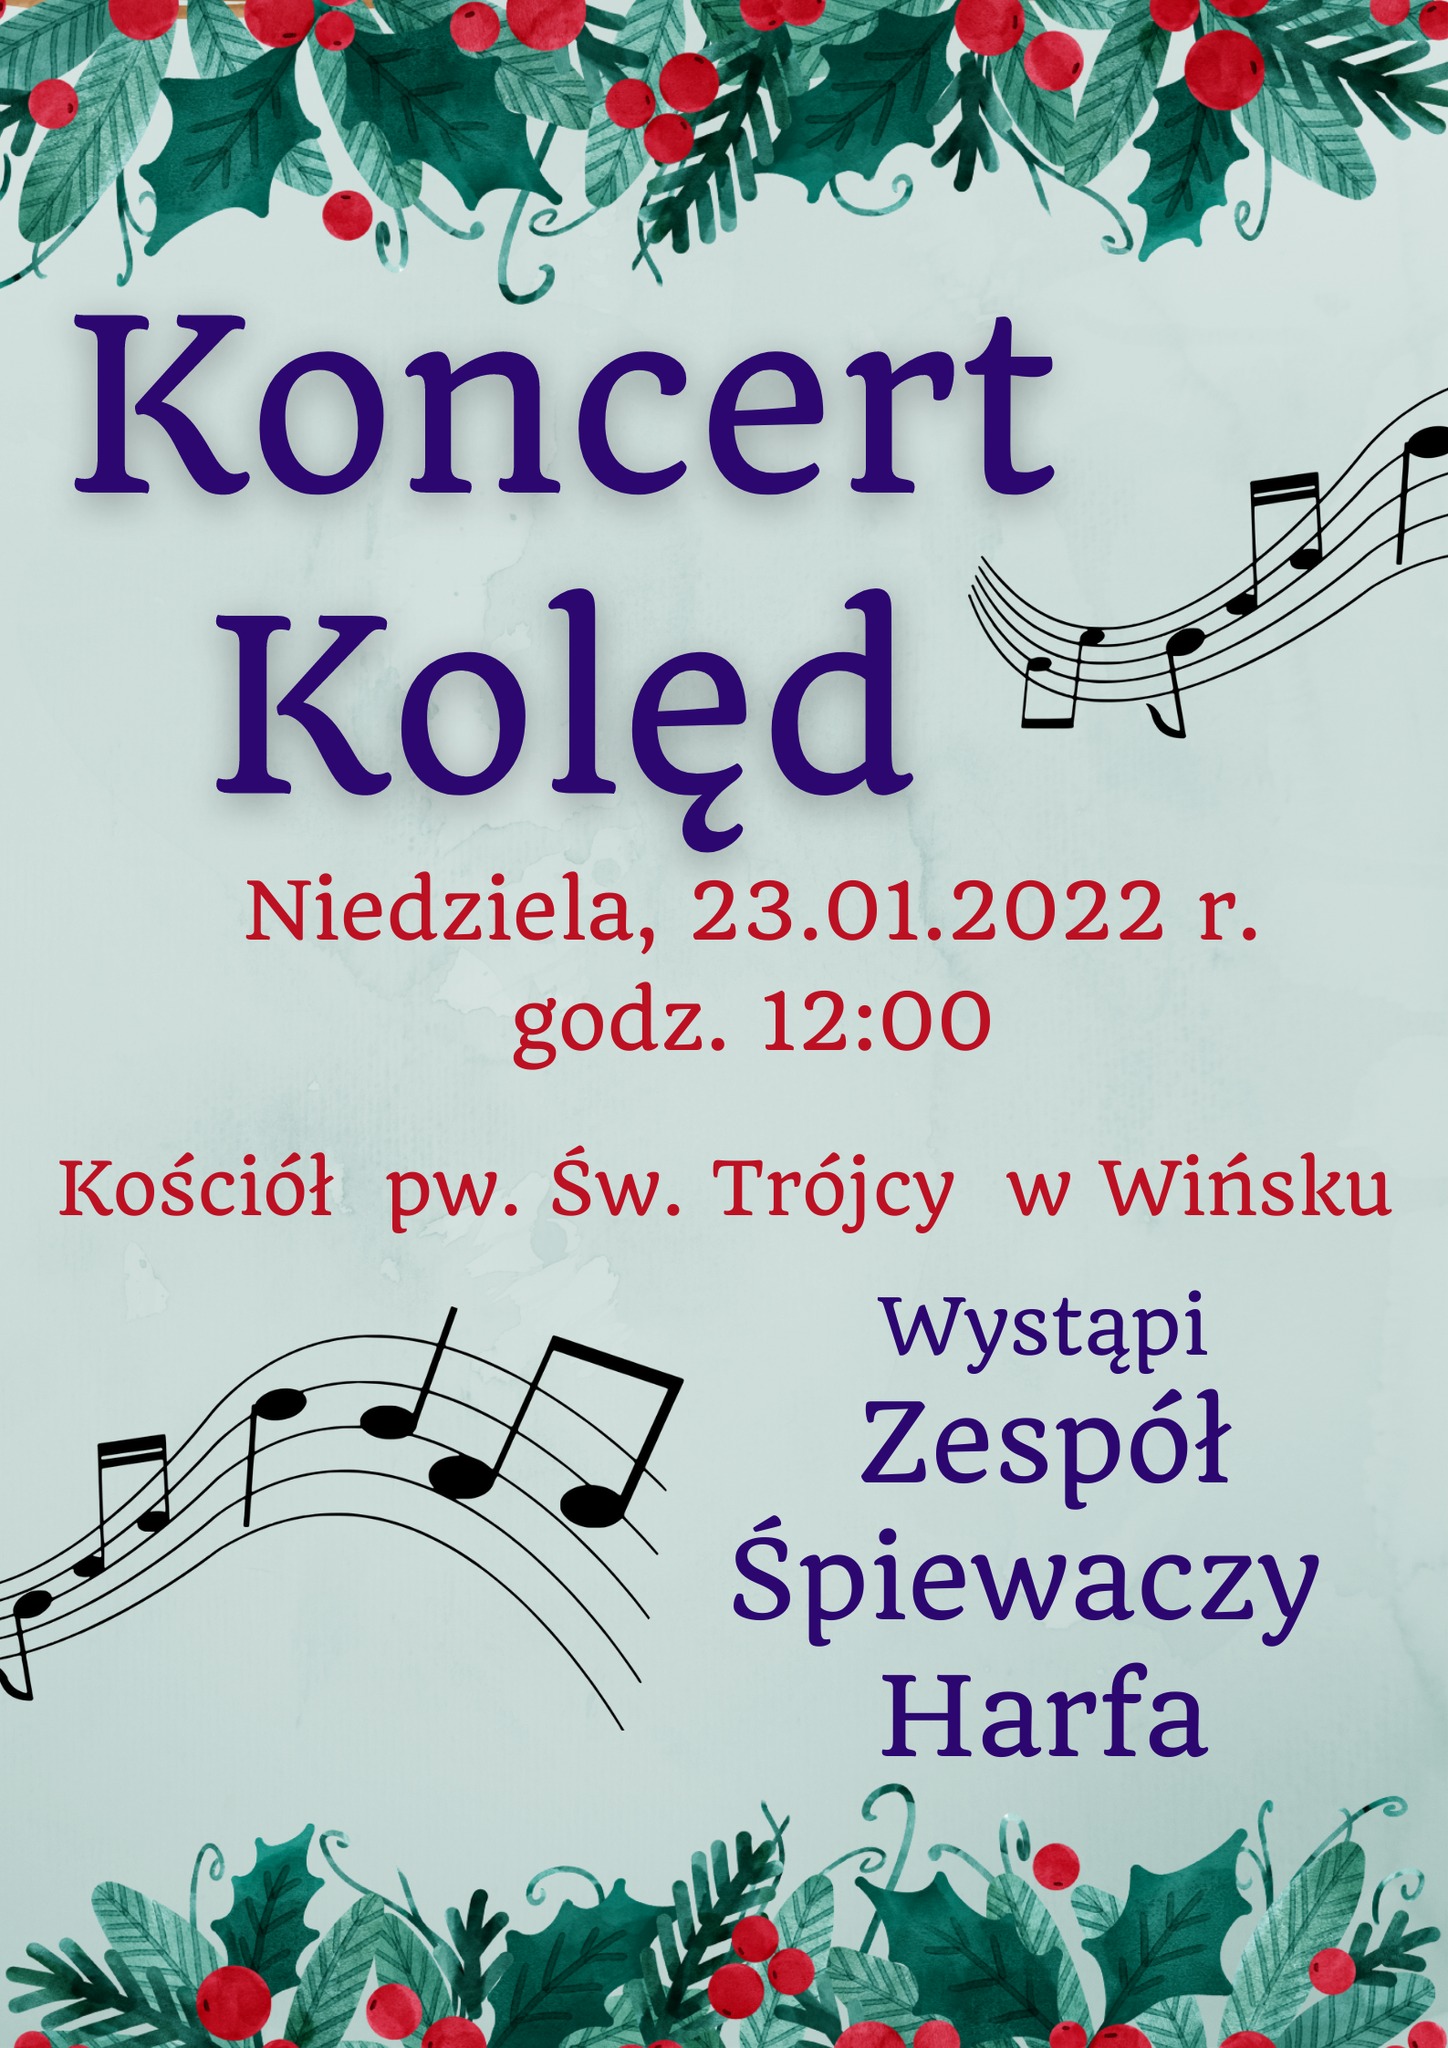 Plakat promujący koncert kolęd.